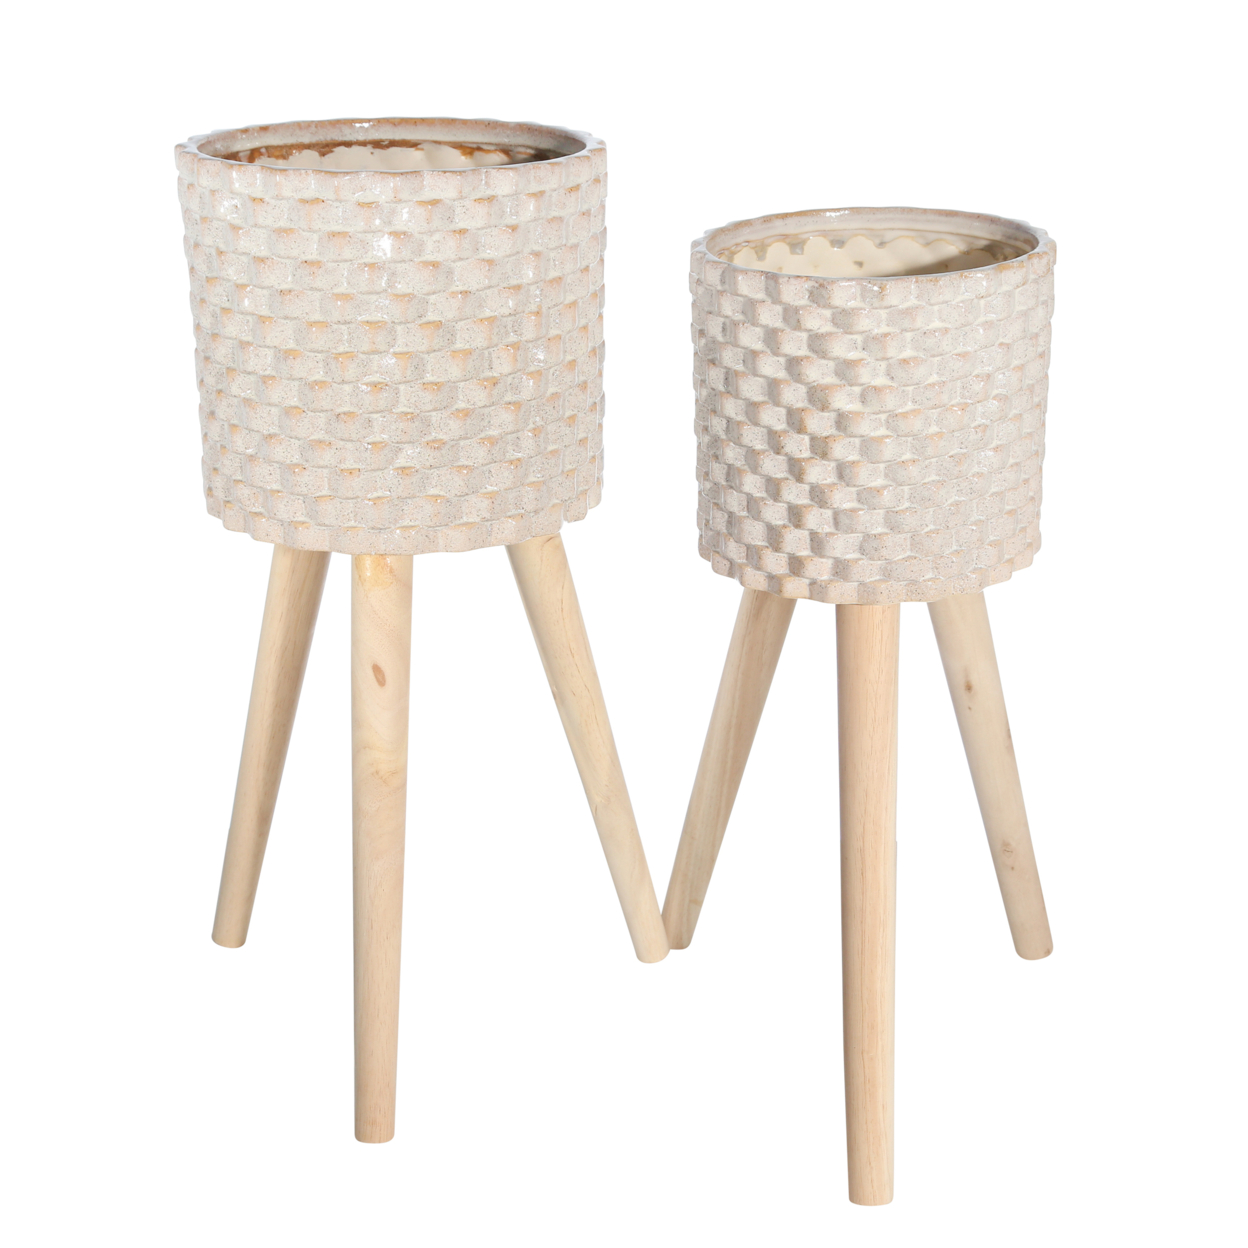 Textured Ceramic Planter With Tripod Legs, Set Of 2, Cream And Brown- Saltoro Sherpi